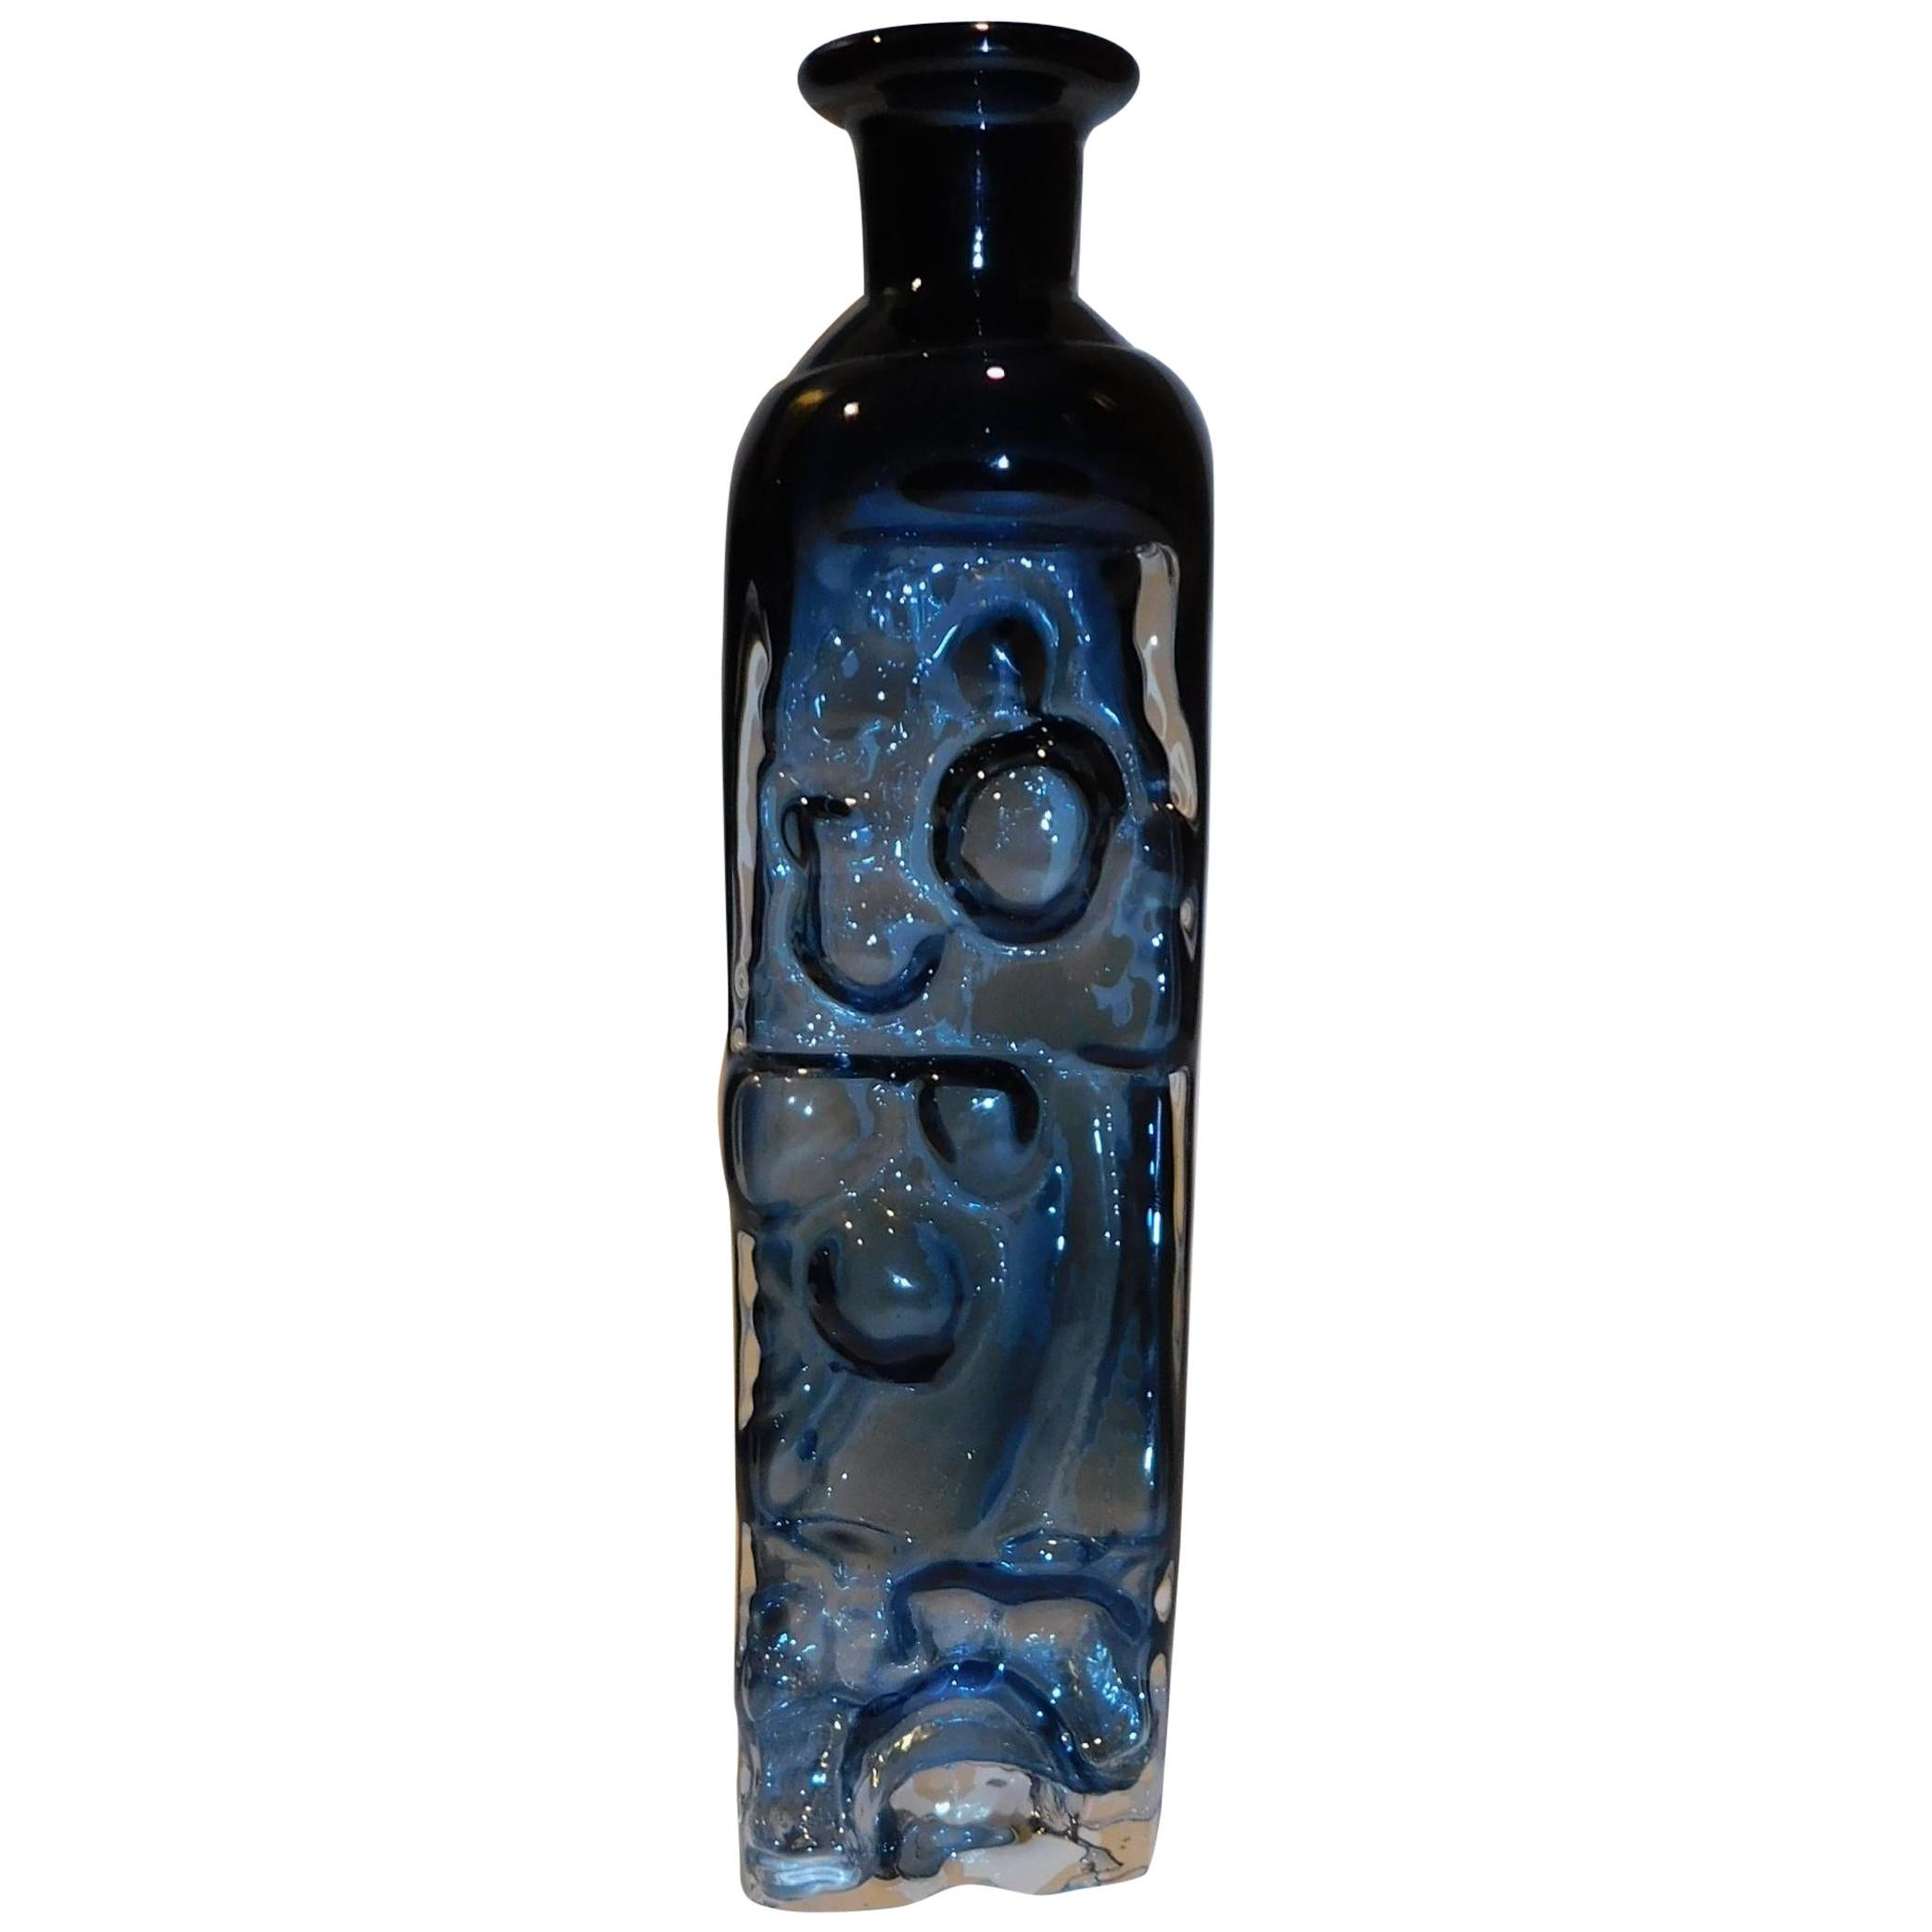 Lars Hellsten Orrefors Glass Vase in Smoky Blue-Grey, 1979